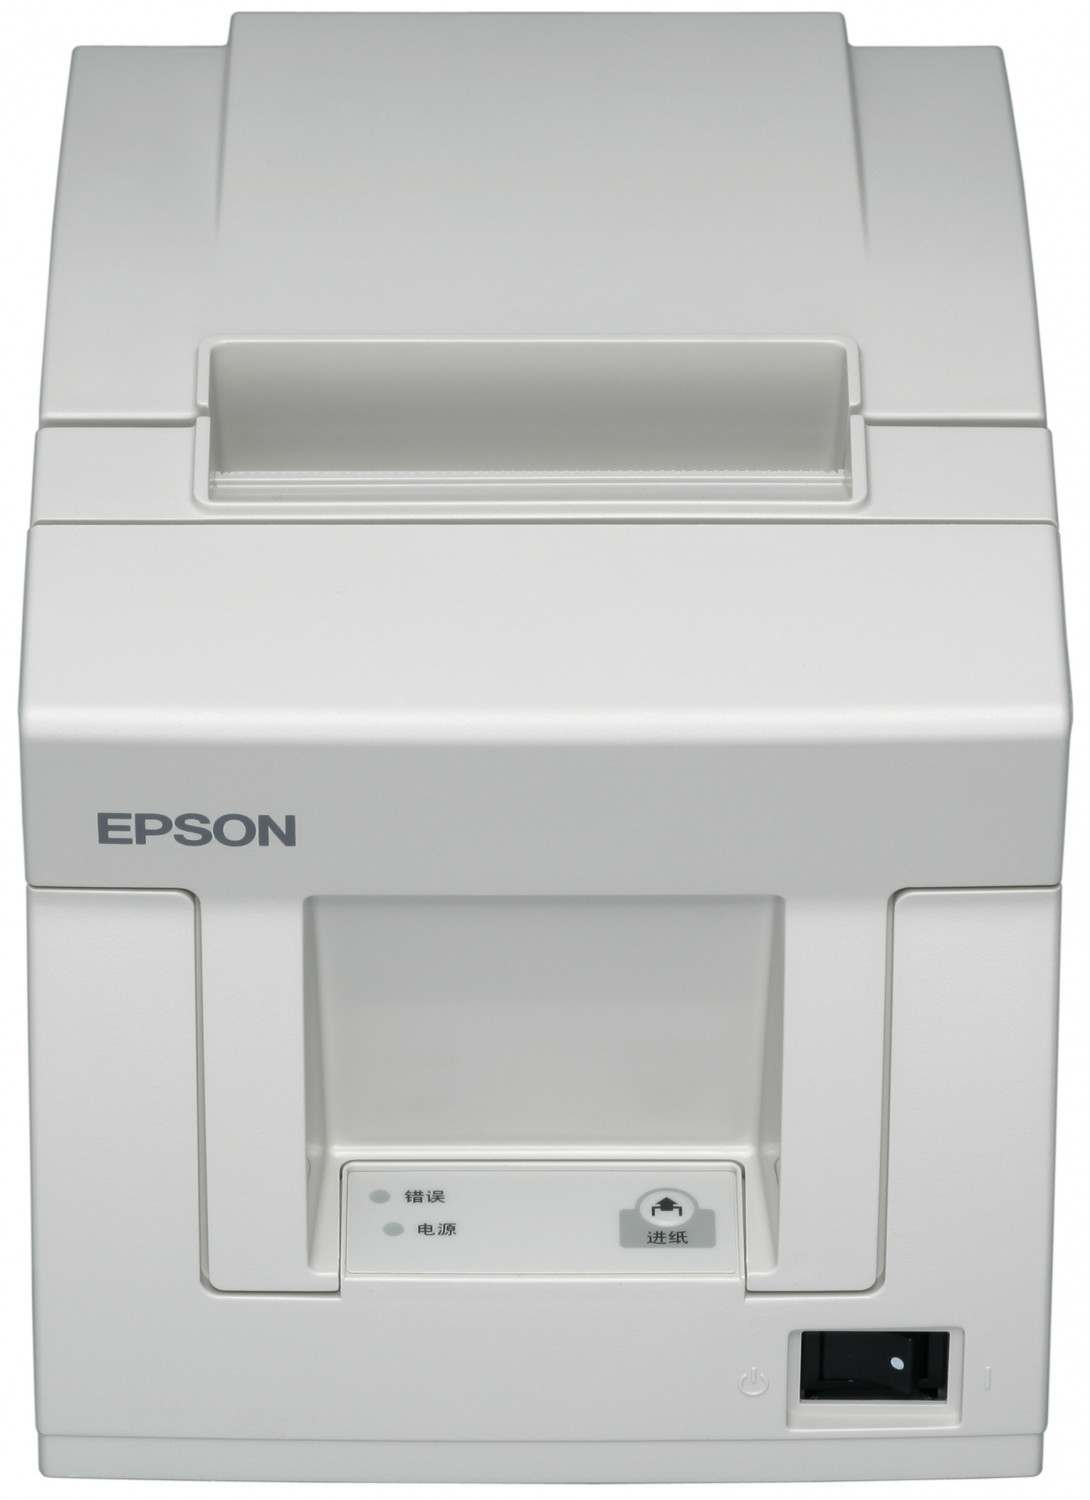 epson thermal printer driver windows 10